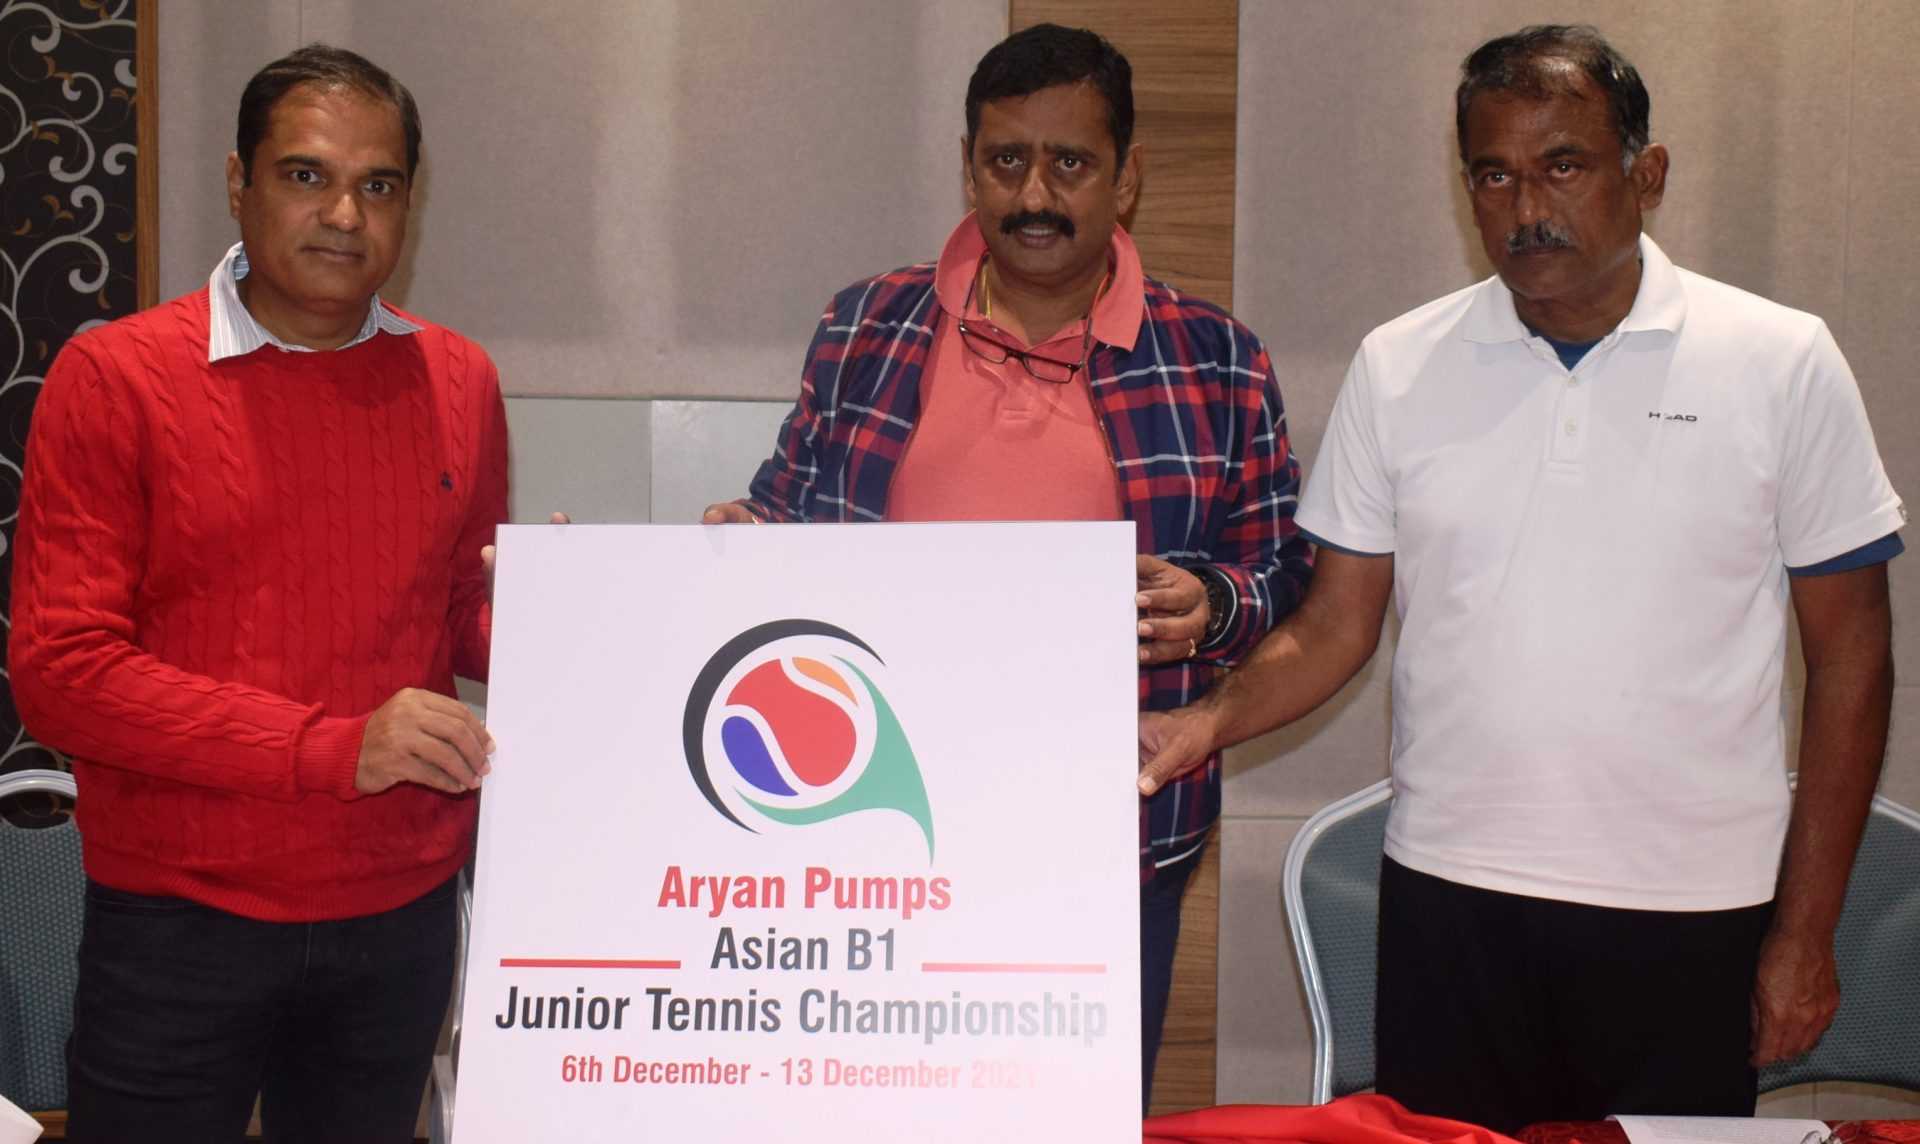 आर्यन पंप्स आशियाई ज्युनियर(कुमार) टेनिस अजिंक्यपद स्पर्धेस 6 डिसेंबर पासून प्रारंभ